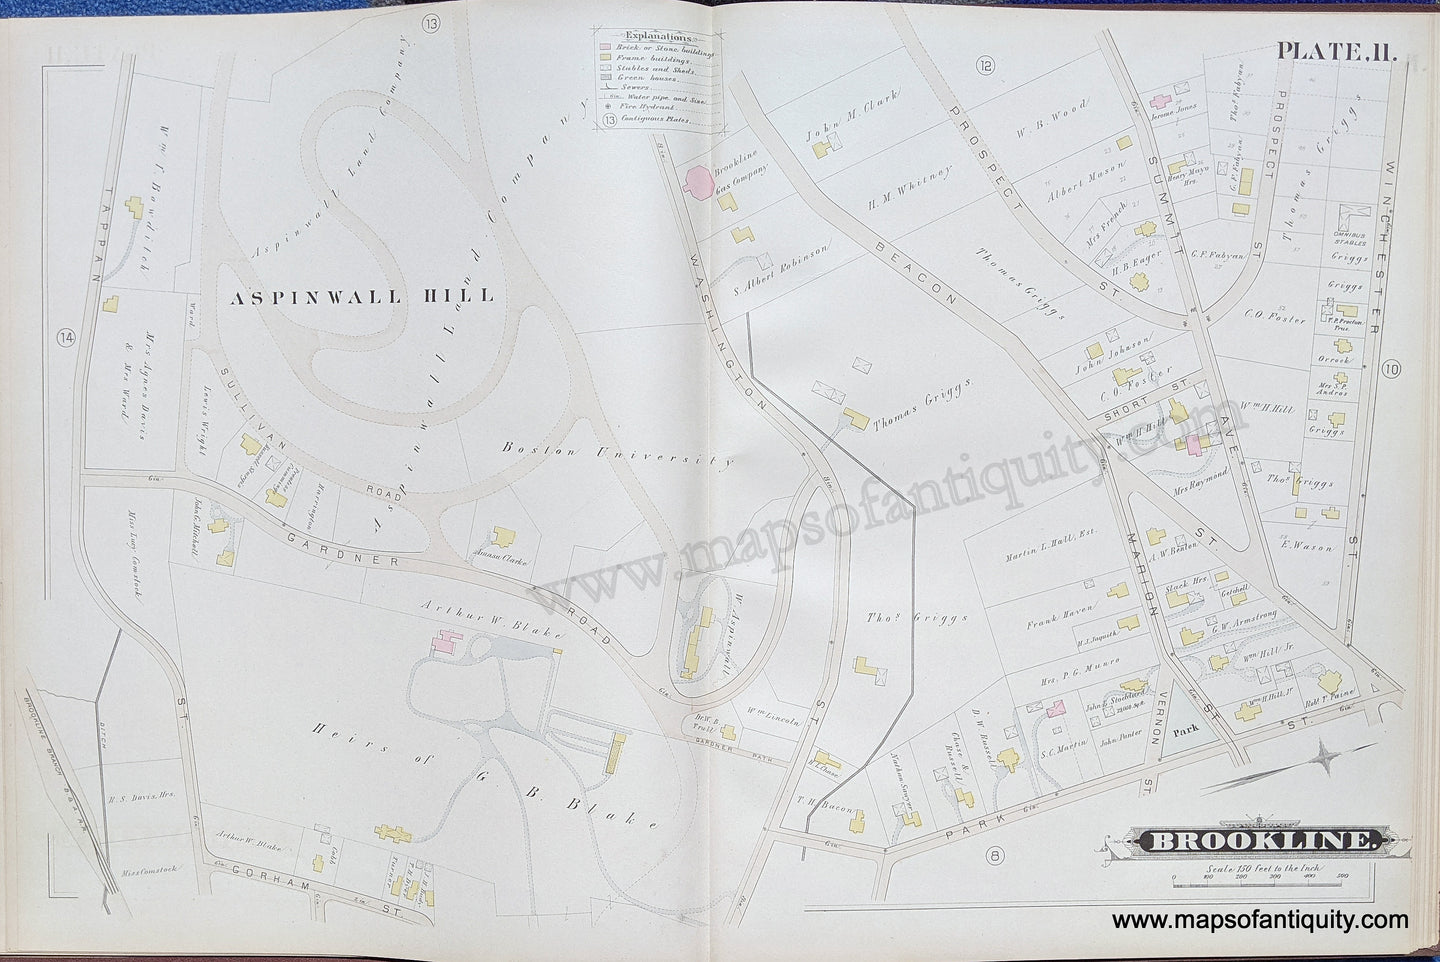 Antique-Map-Brookline-Mass.-Plate-11-United-States-Massachusetts-1884-Hopkins-Maps-Of-Antiquity-1800s-19th-century